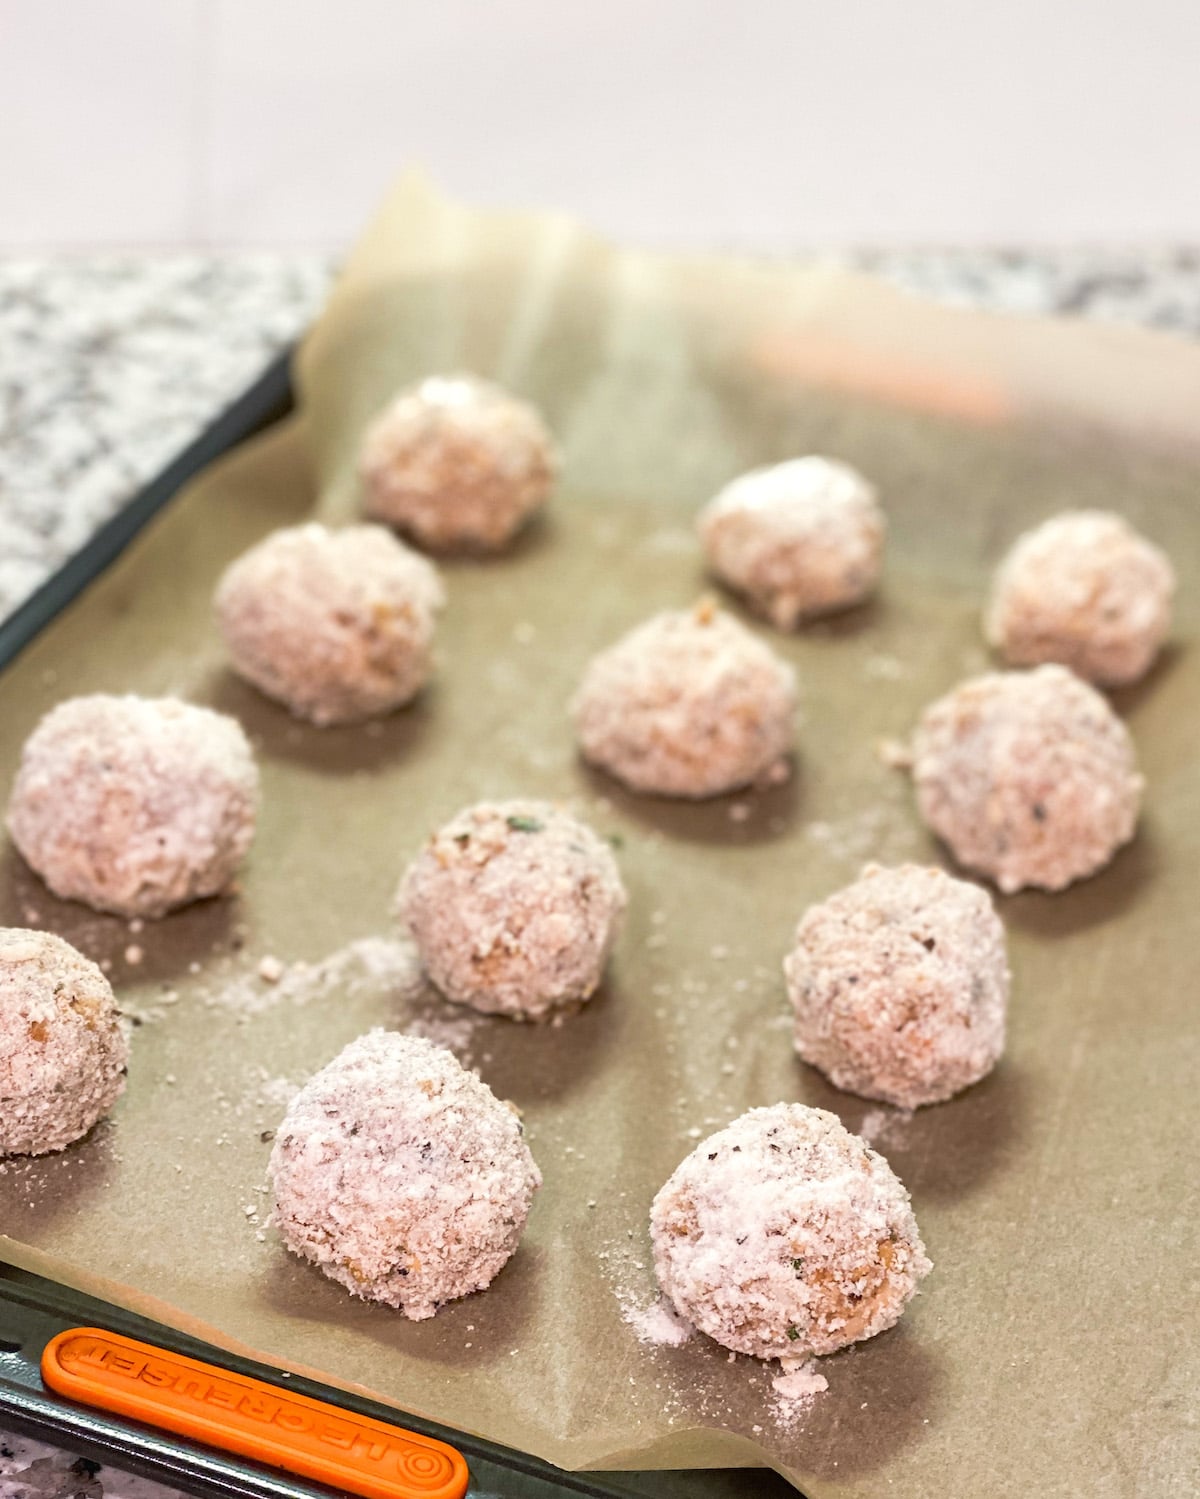 12 cauliflower Rice Balls prepped on a baking sheet